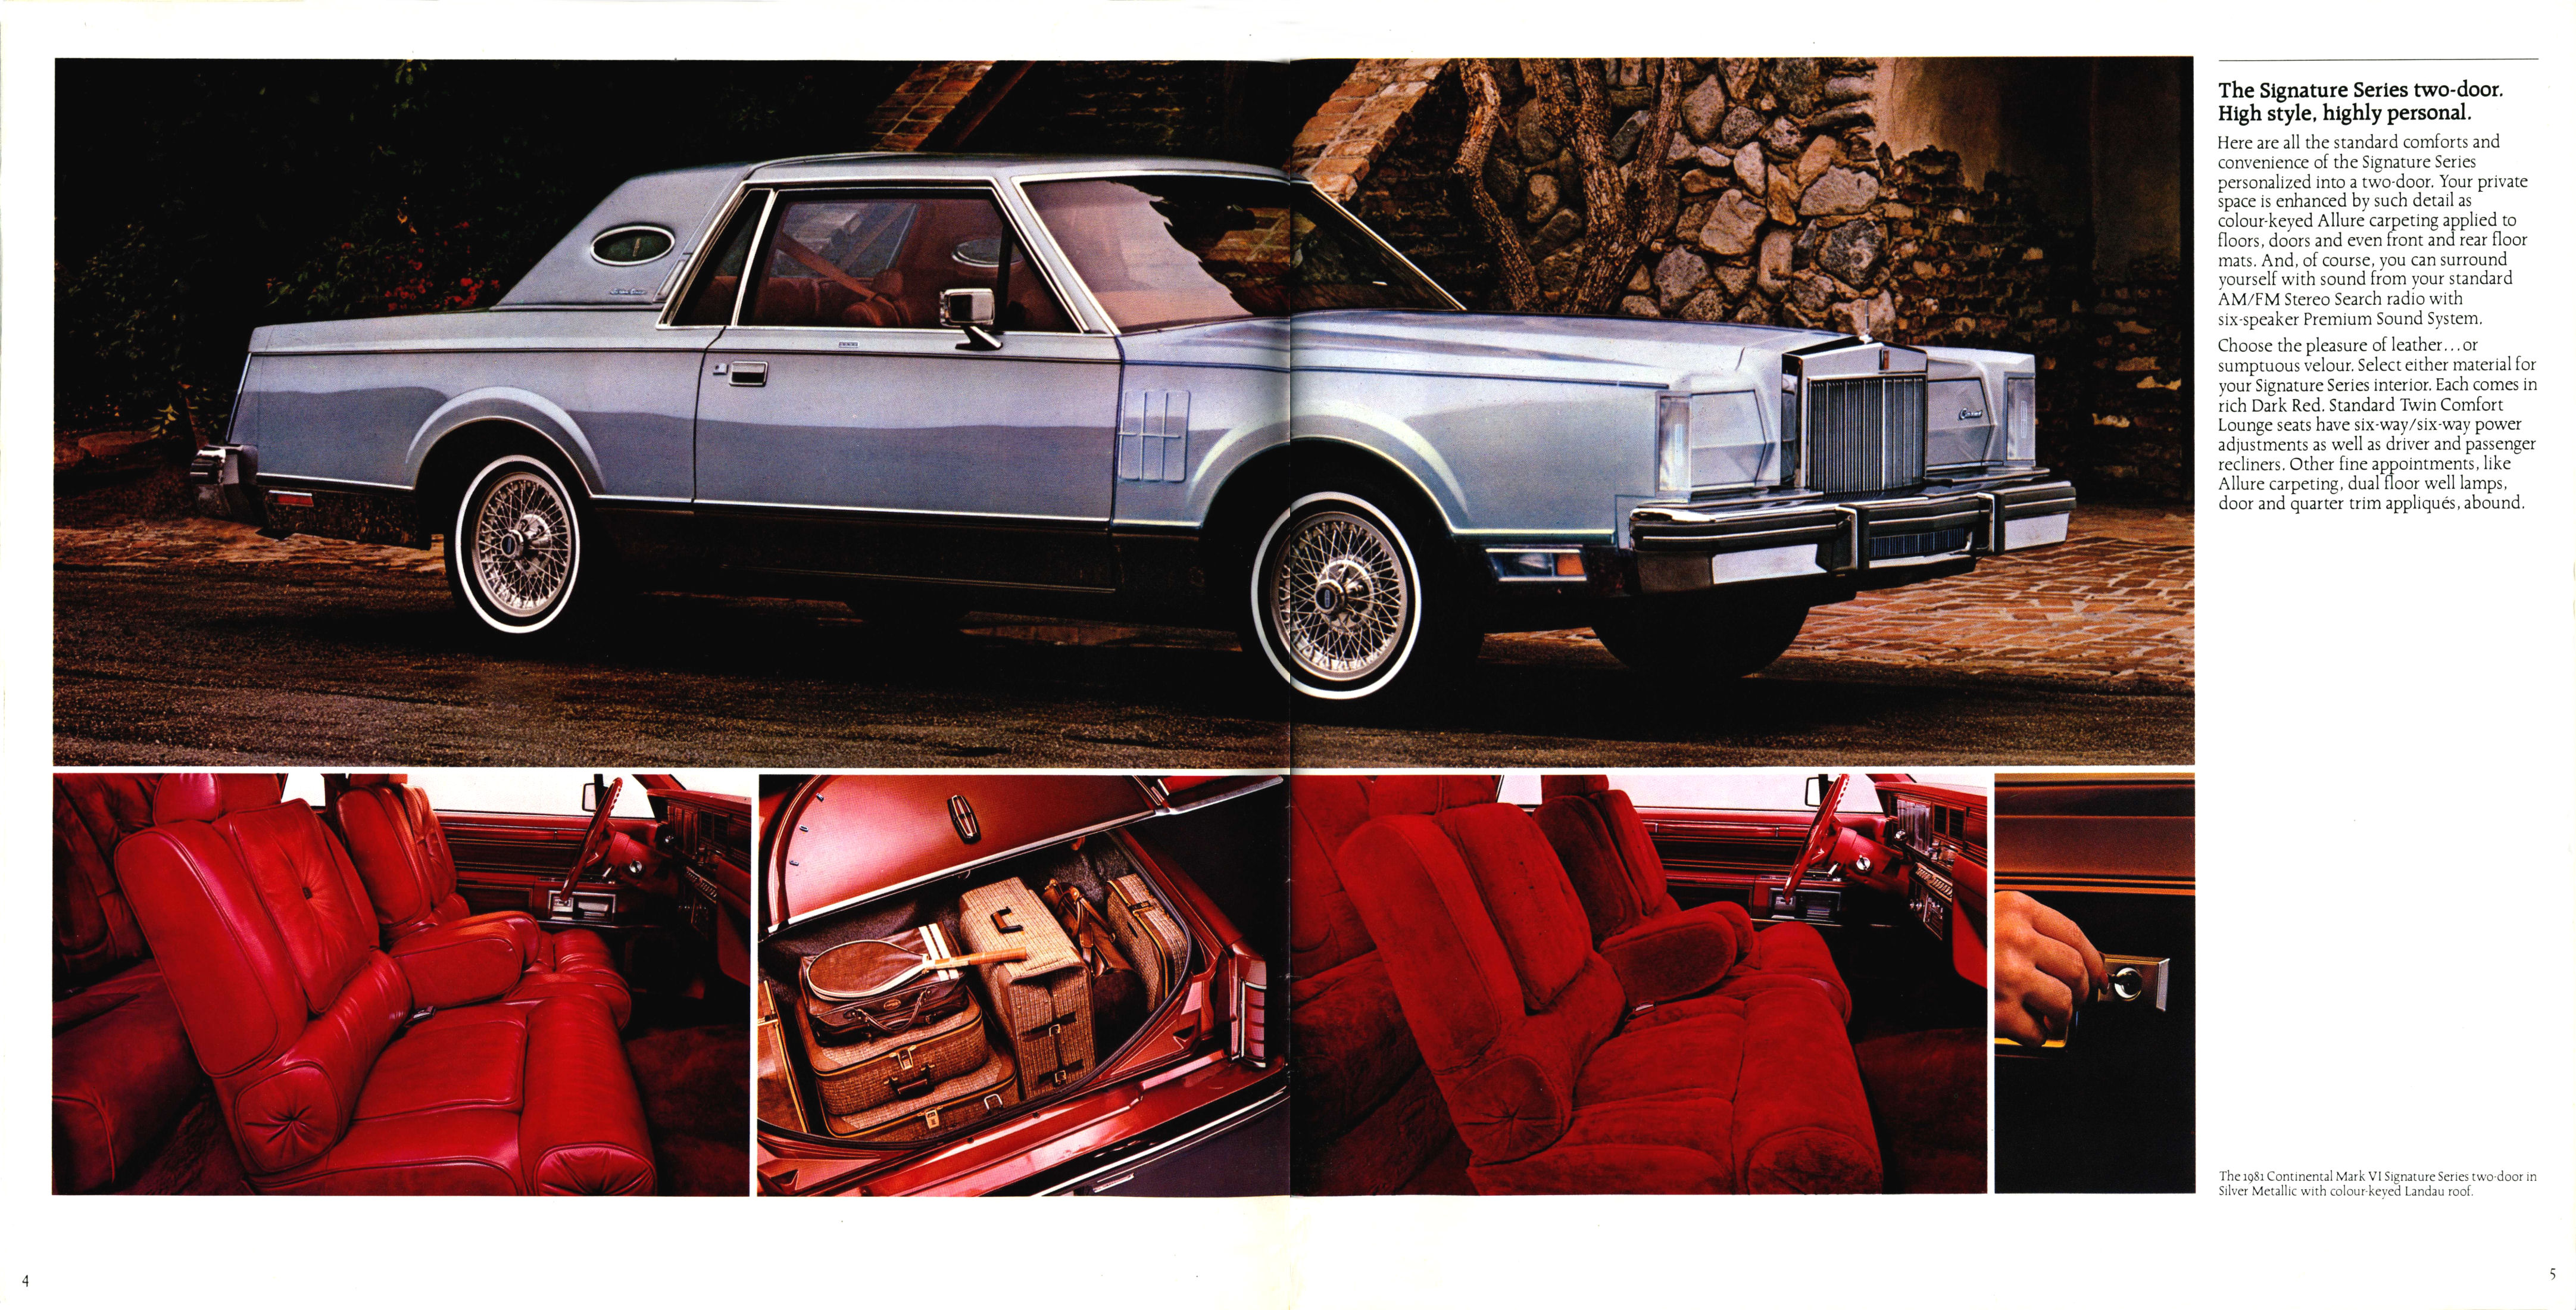 1981_Lincoln__Continental_Mk_VI_Cdn-04-05